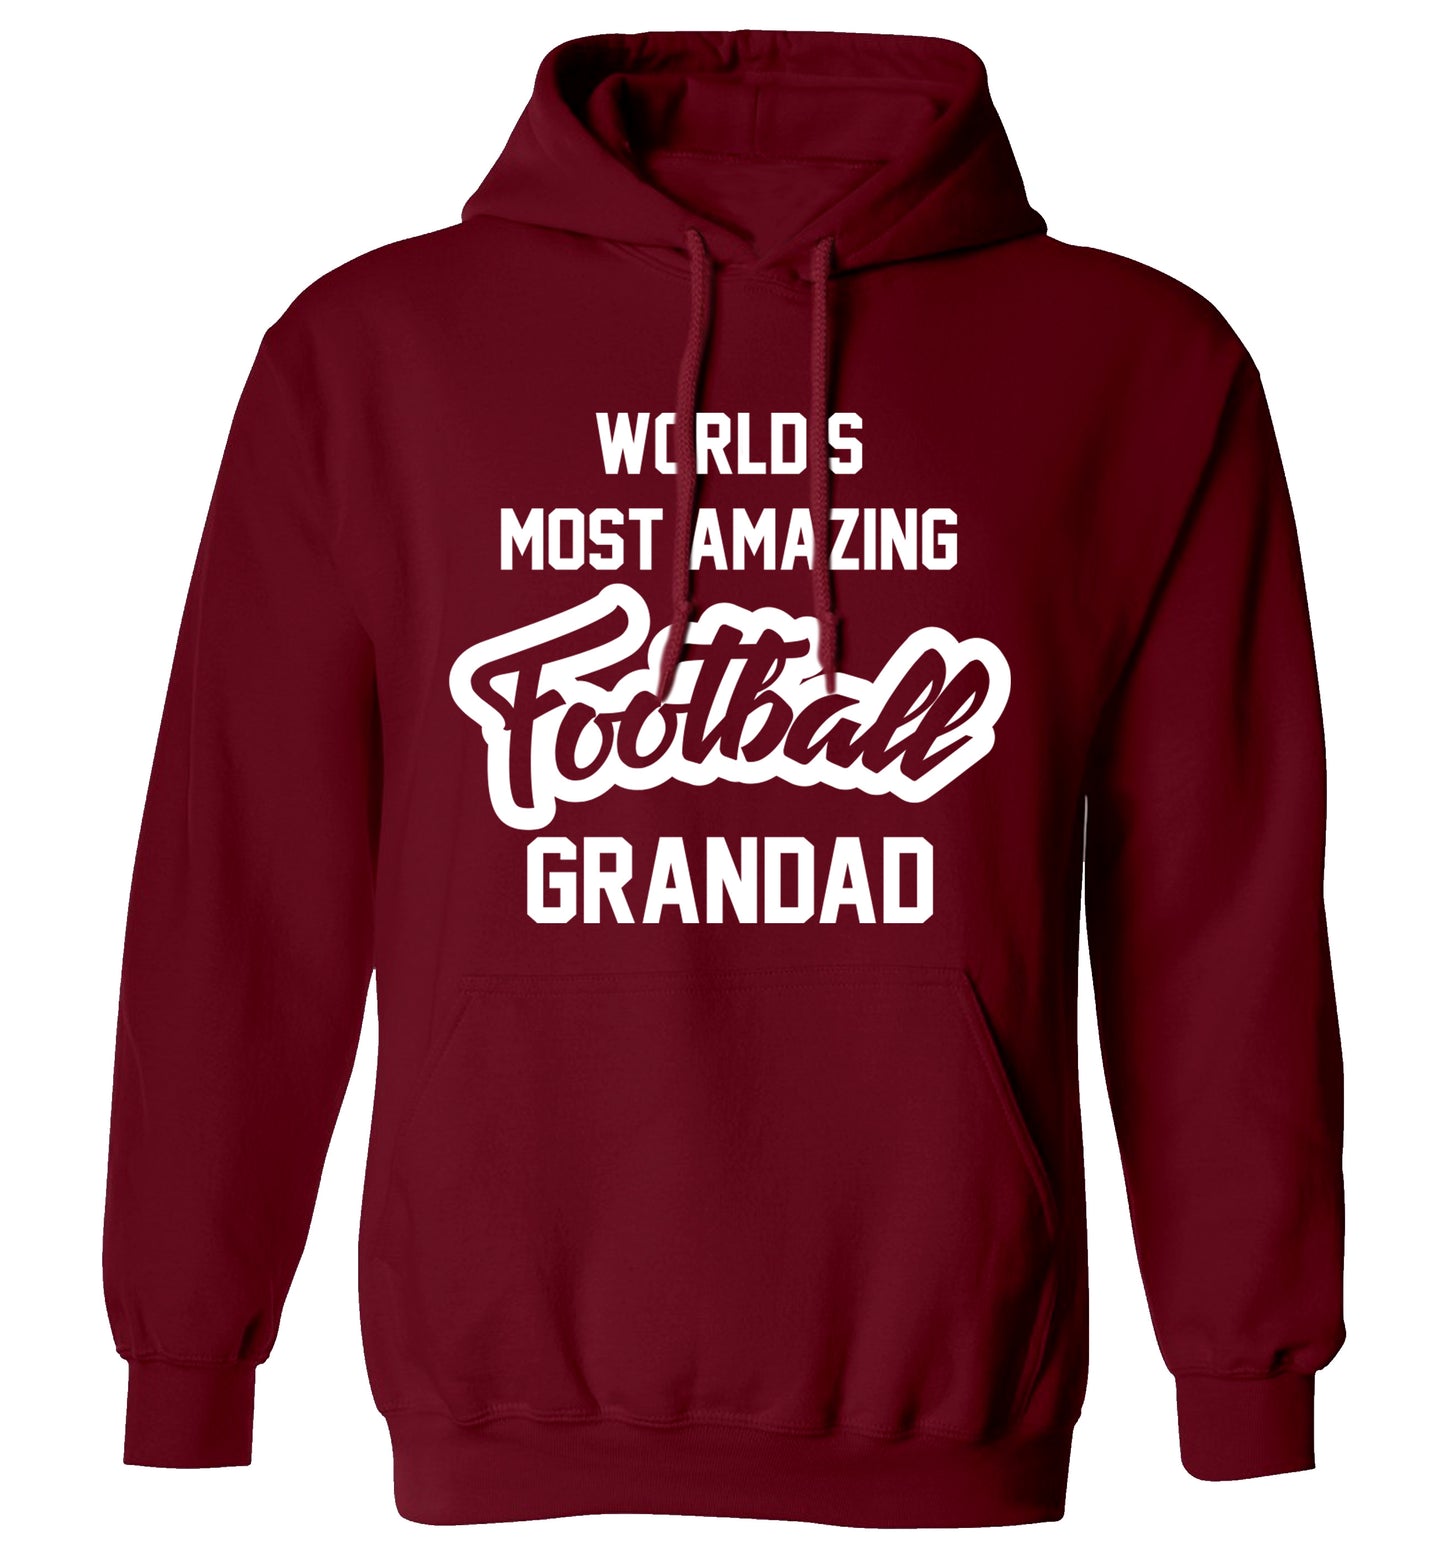 Worlds most amazing football grandad adults unisexmaroon hoodie 2XL